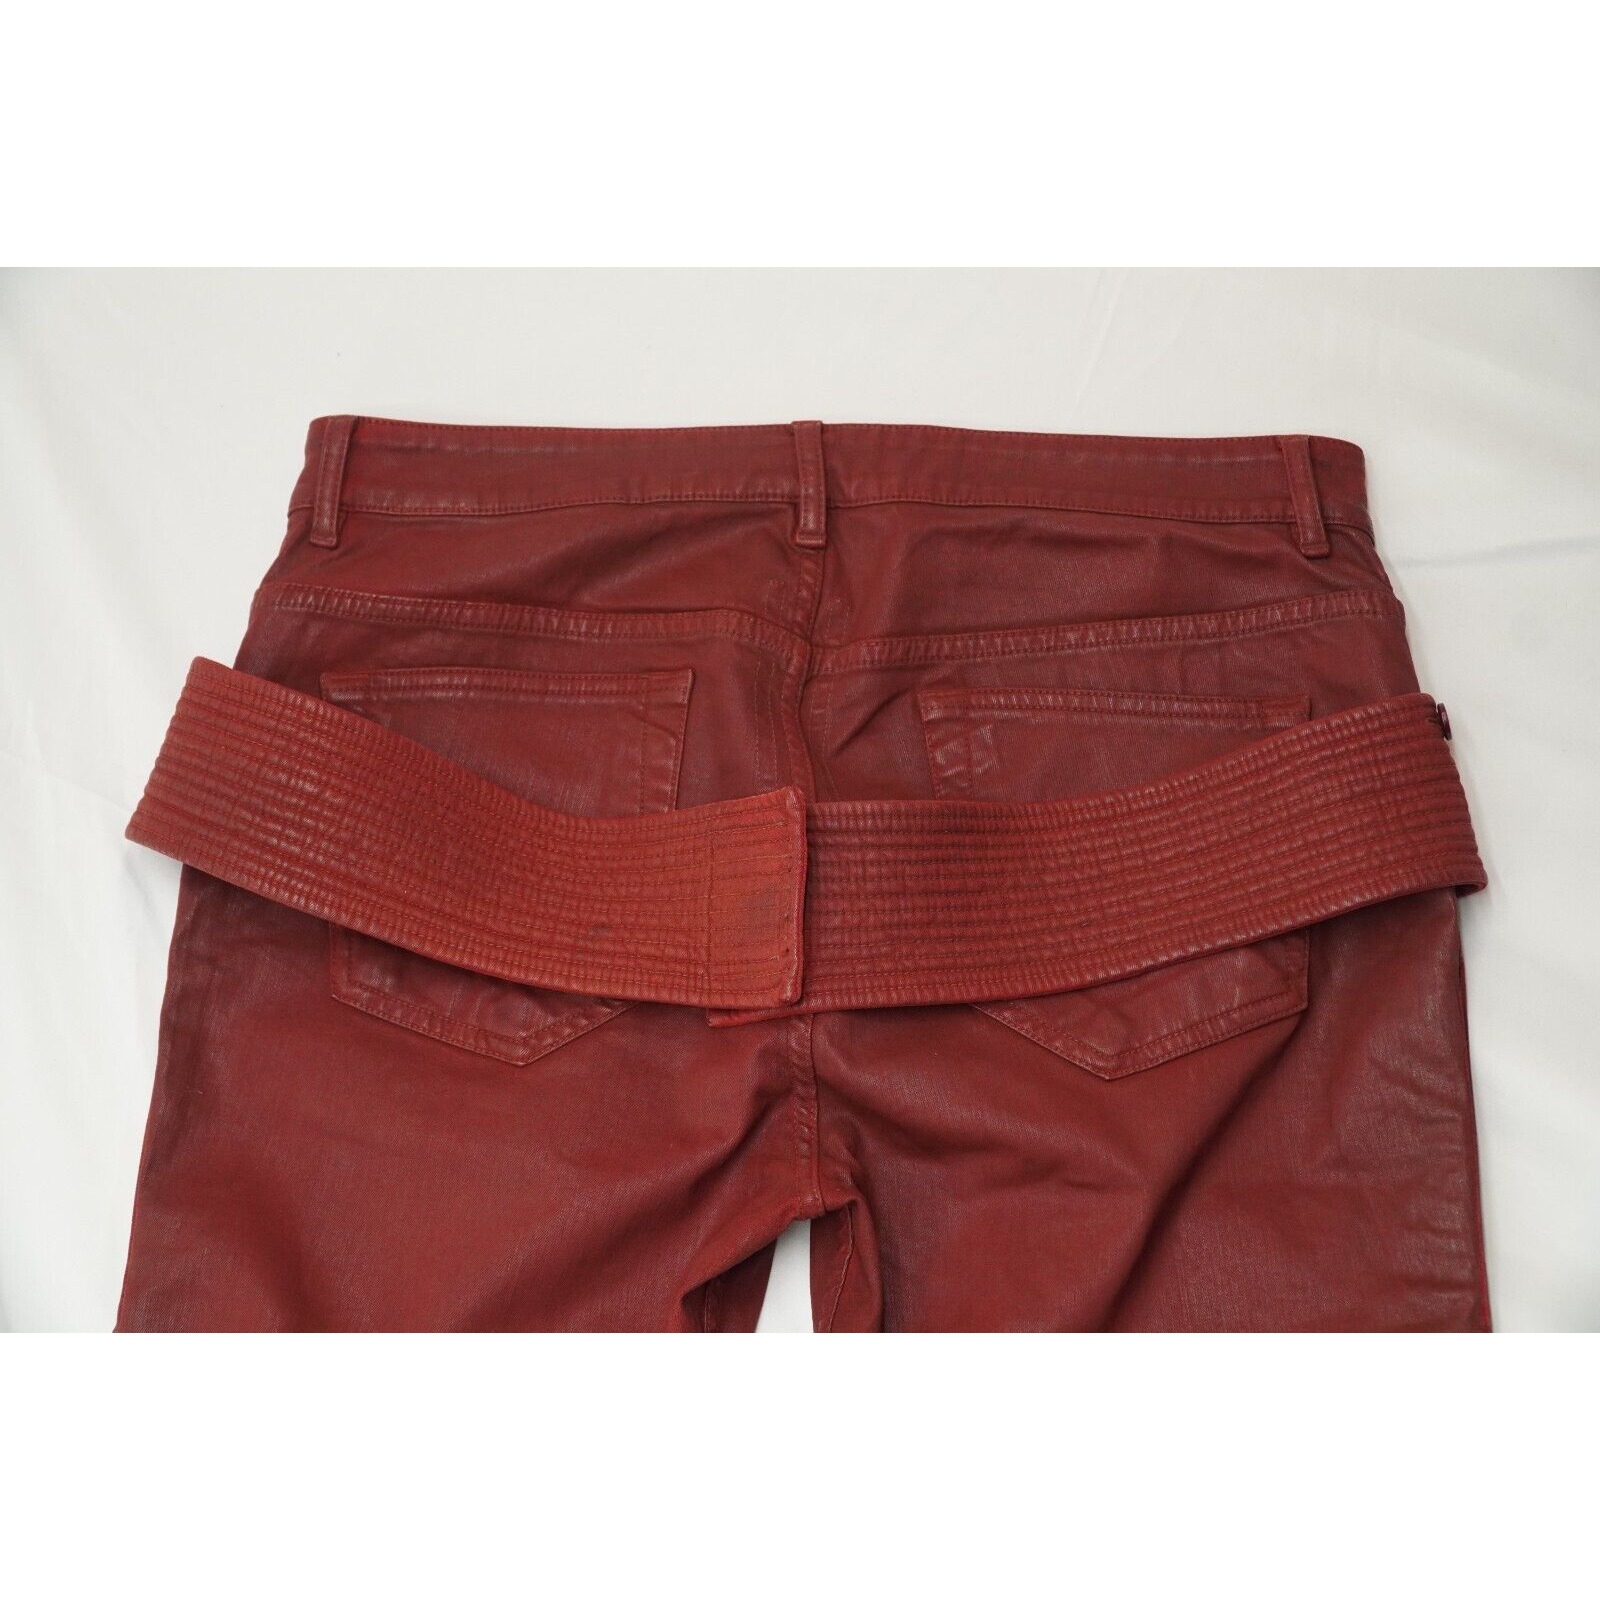 SS21 Easy Creatch Cut 33 Wax Trouser Cargo Pants Dark Cherry - 9